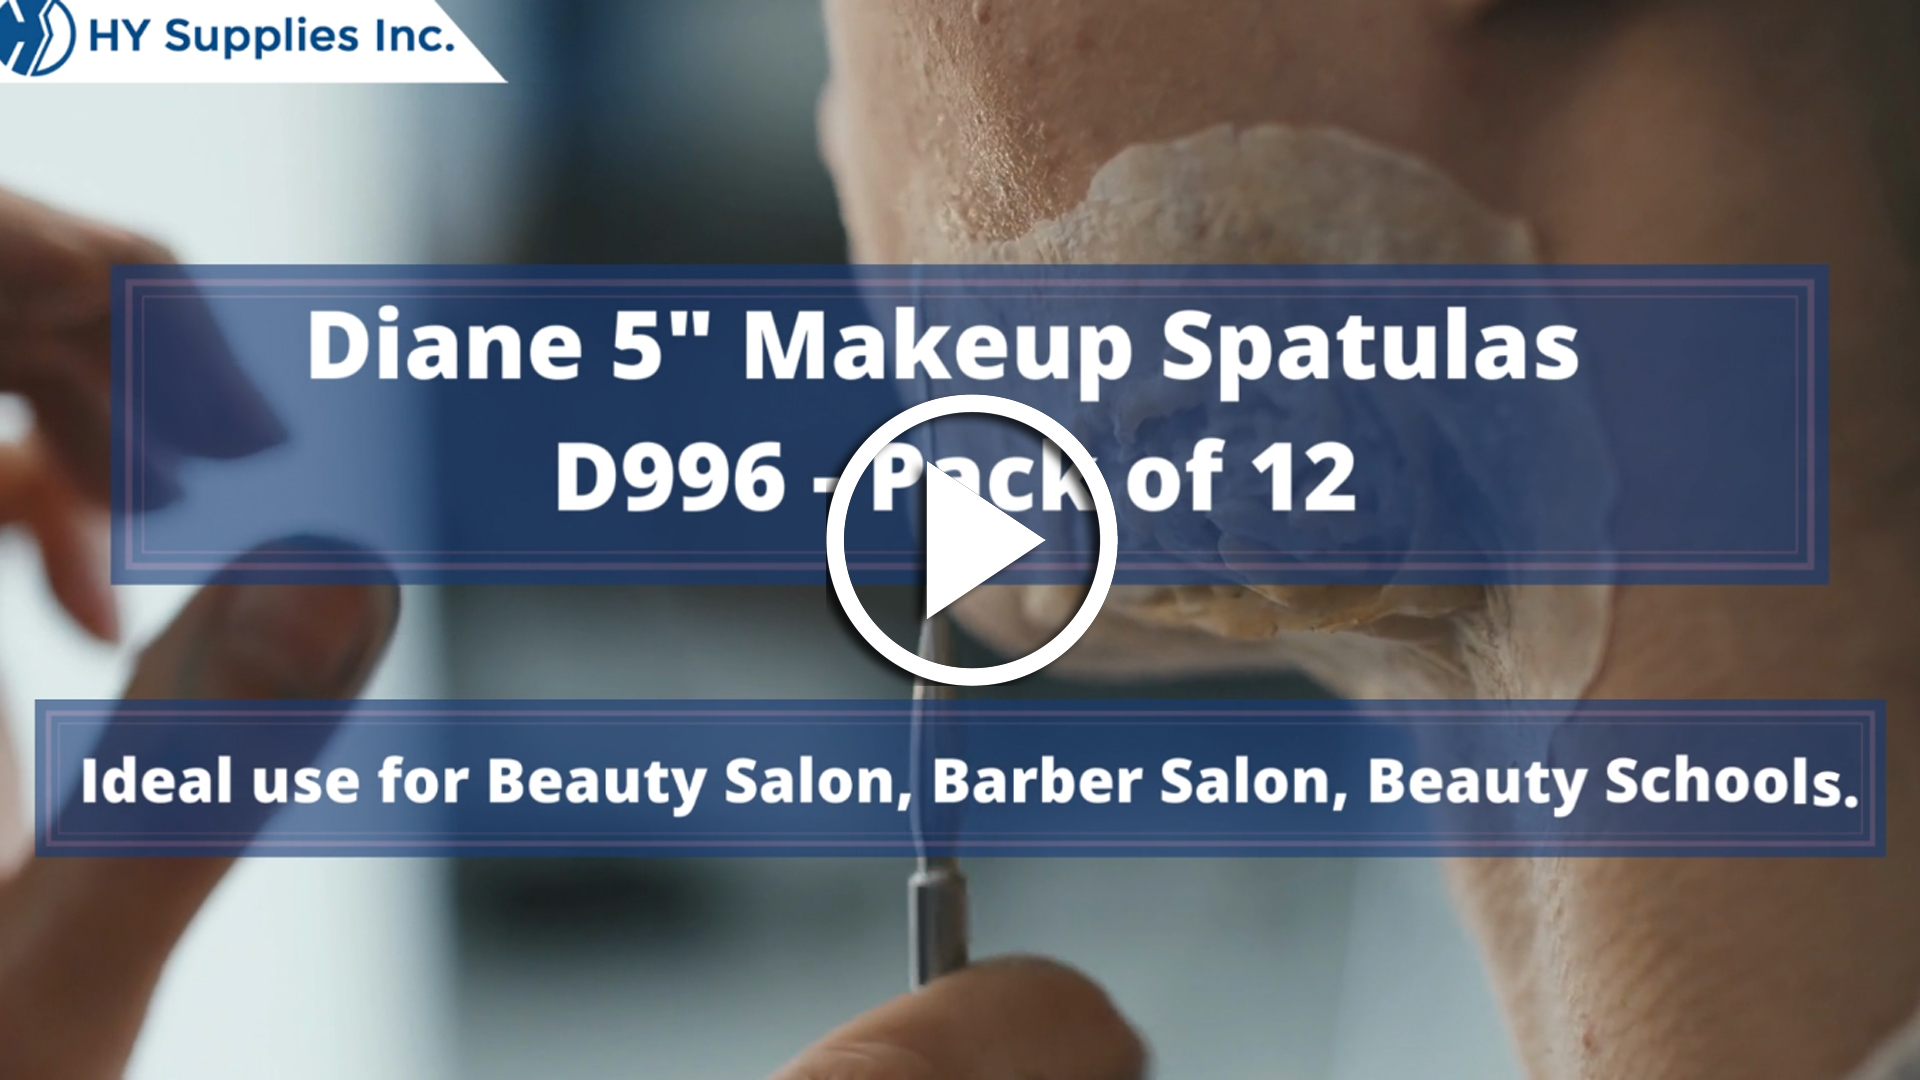 Diane 5"" Makeup Spatulas D996